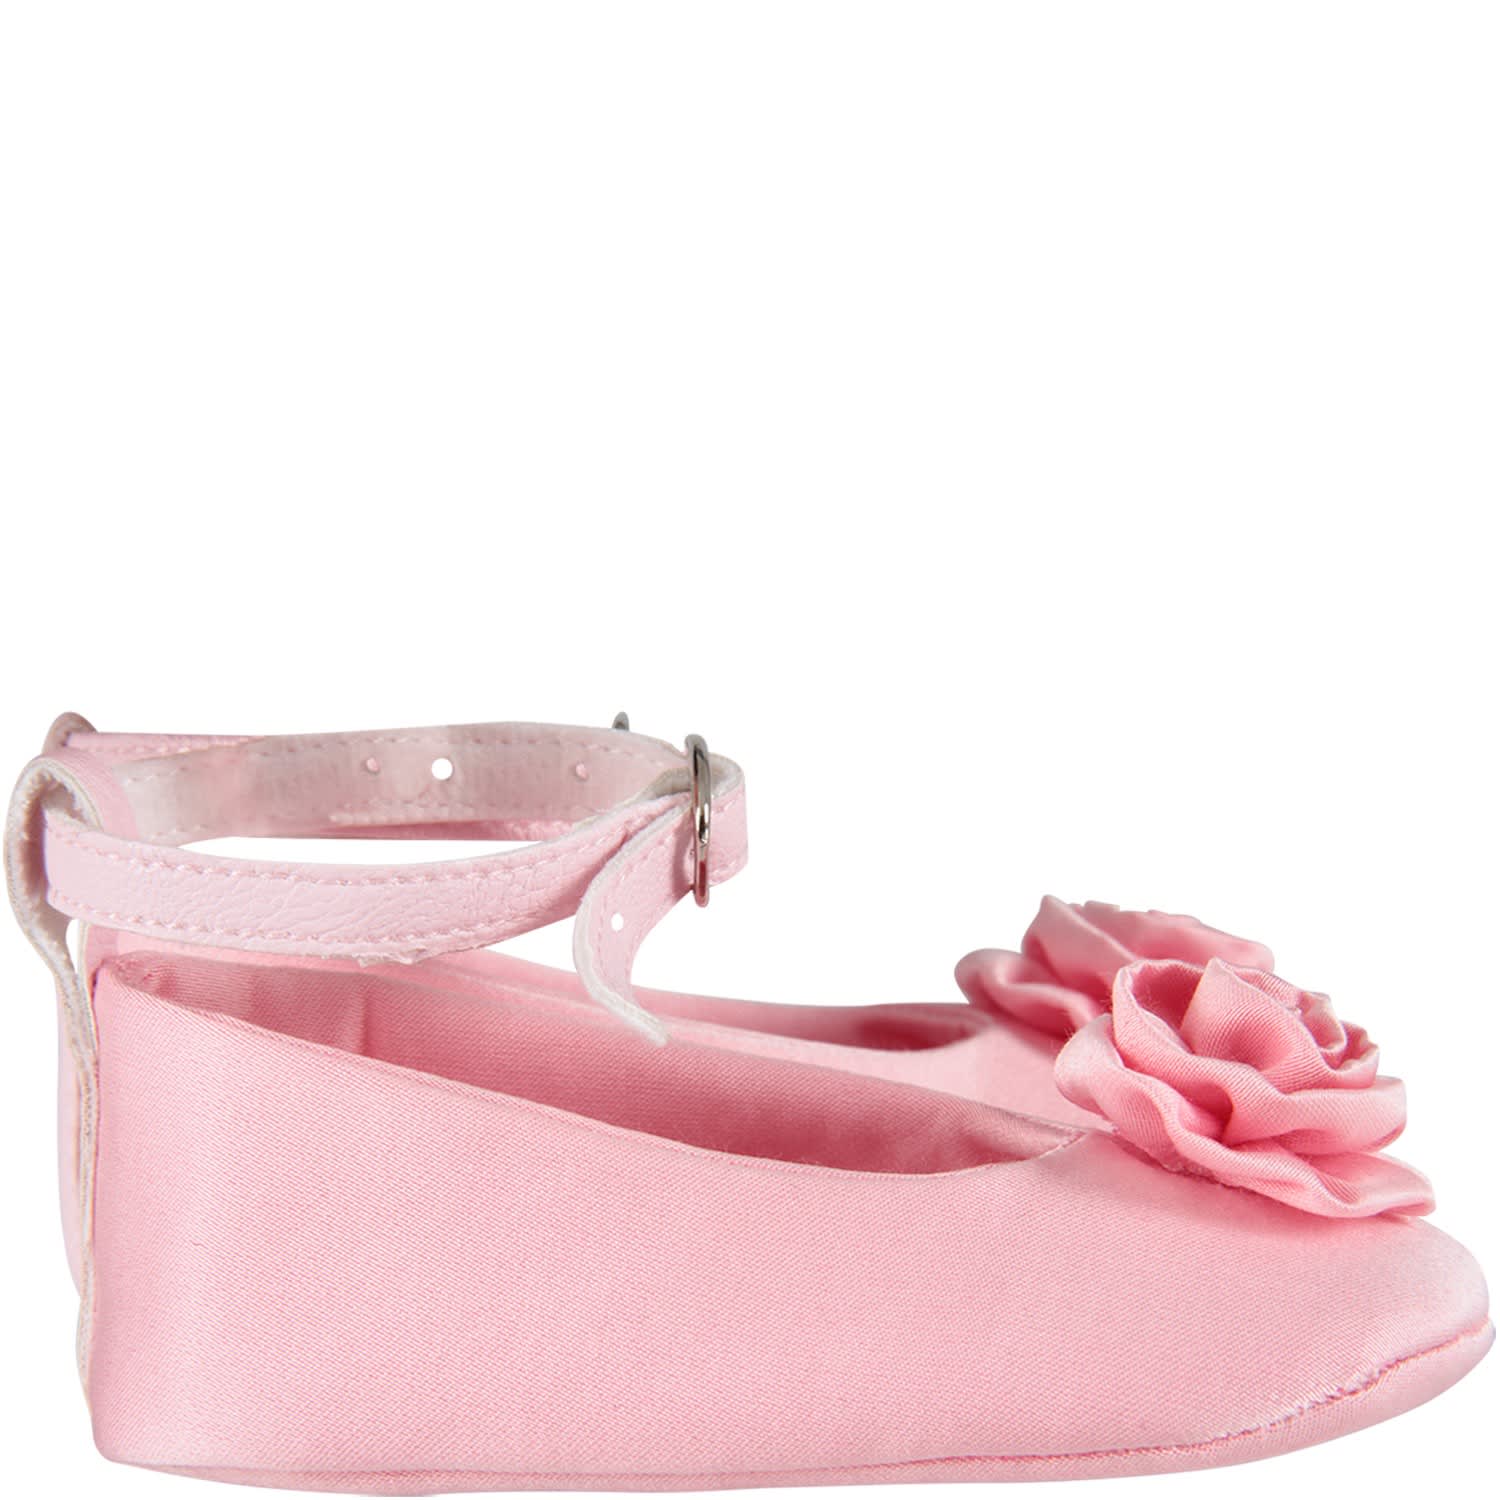 rose pink flat shoes